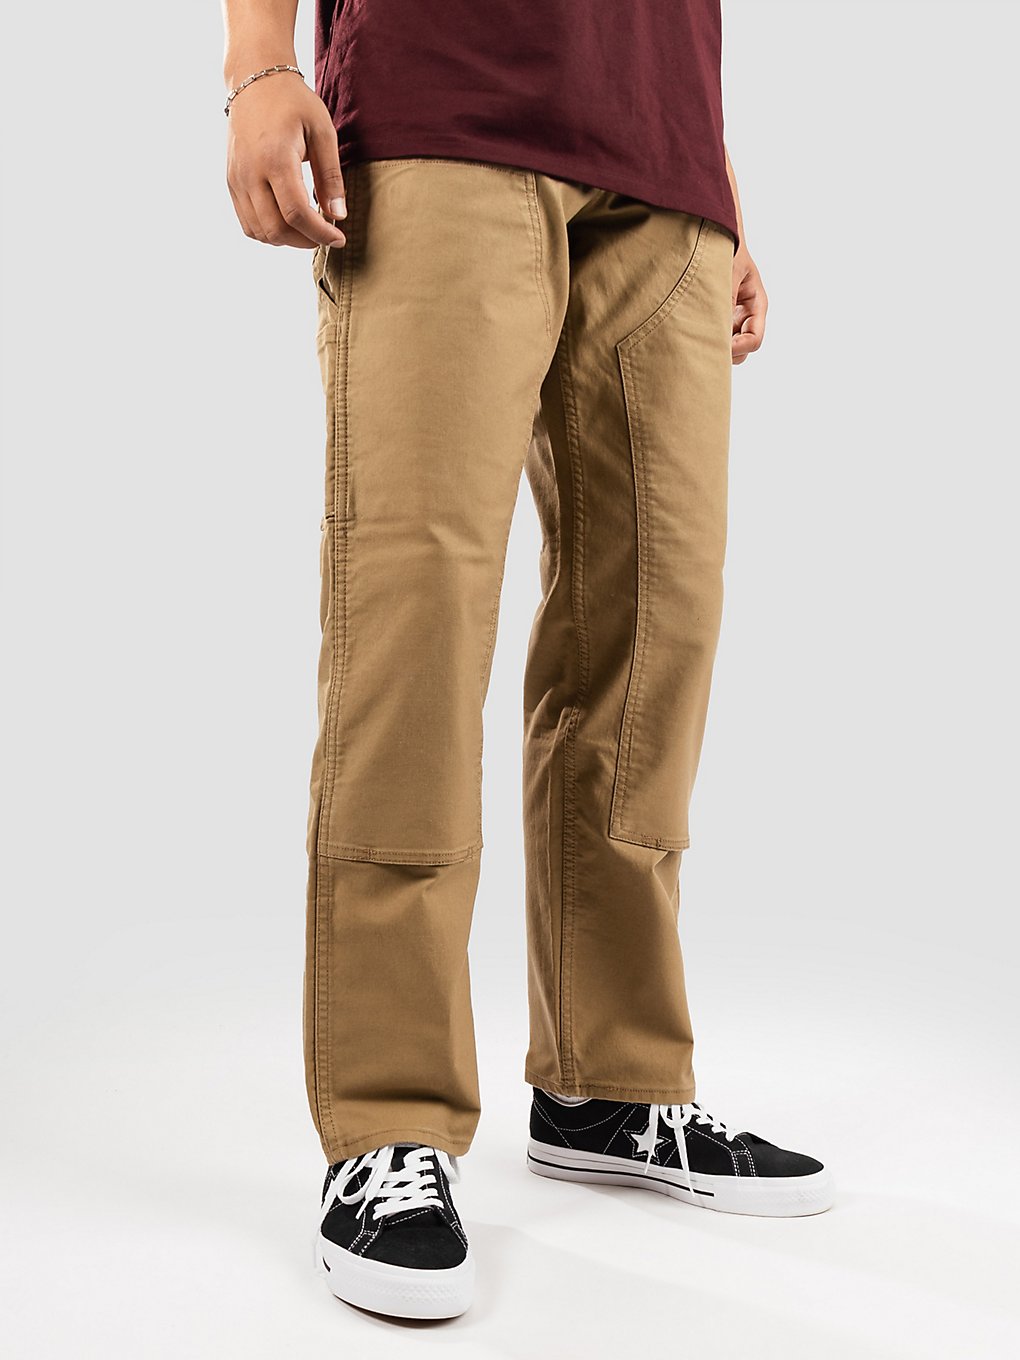 Levi's Workwear Dbl Knee Pantalones marrón